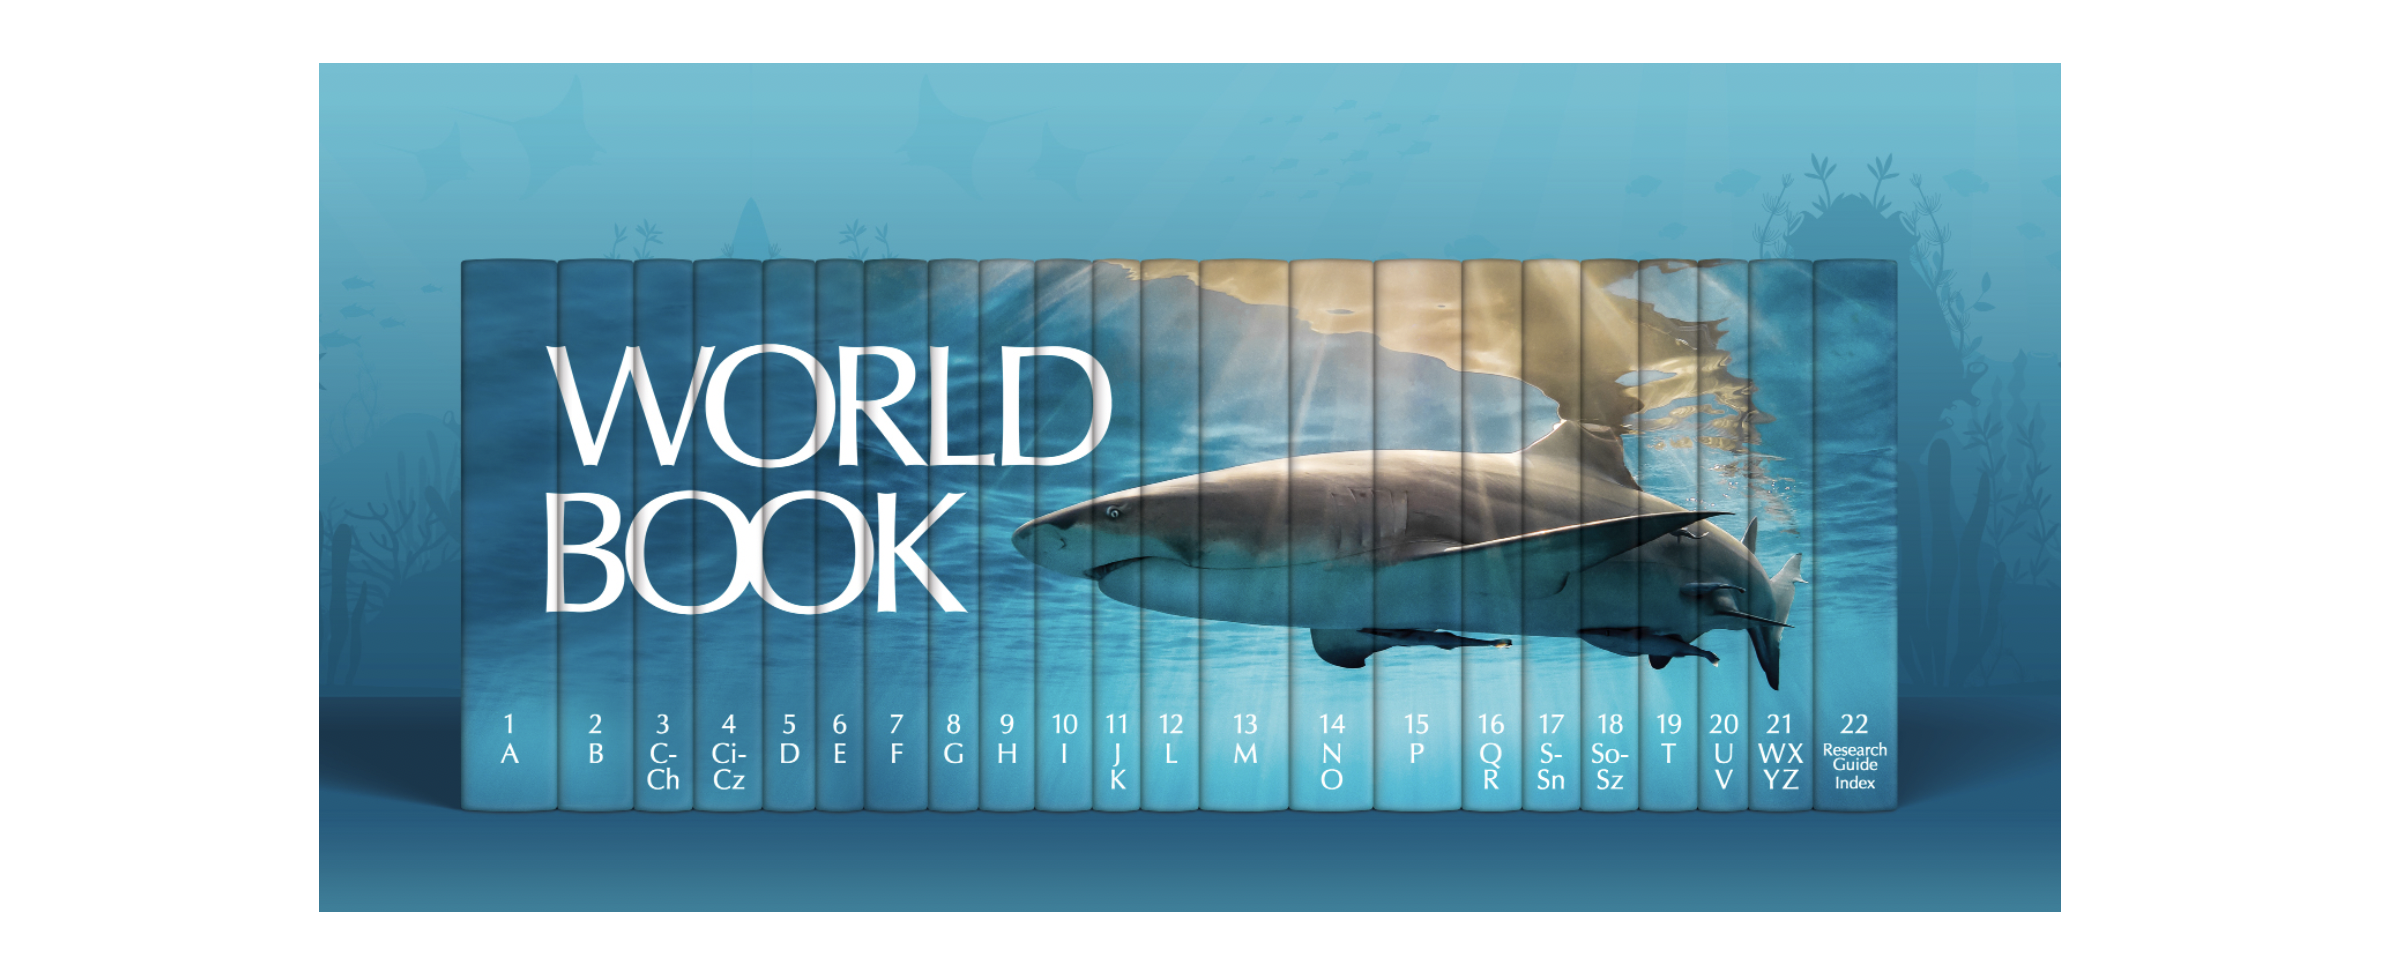 world book encyclopedia 2020 pdf - Ecosia - Images